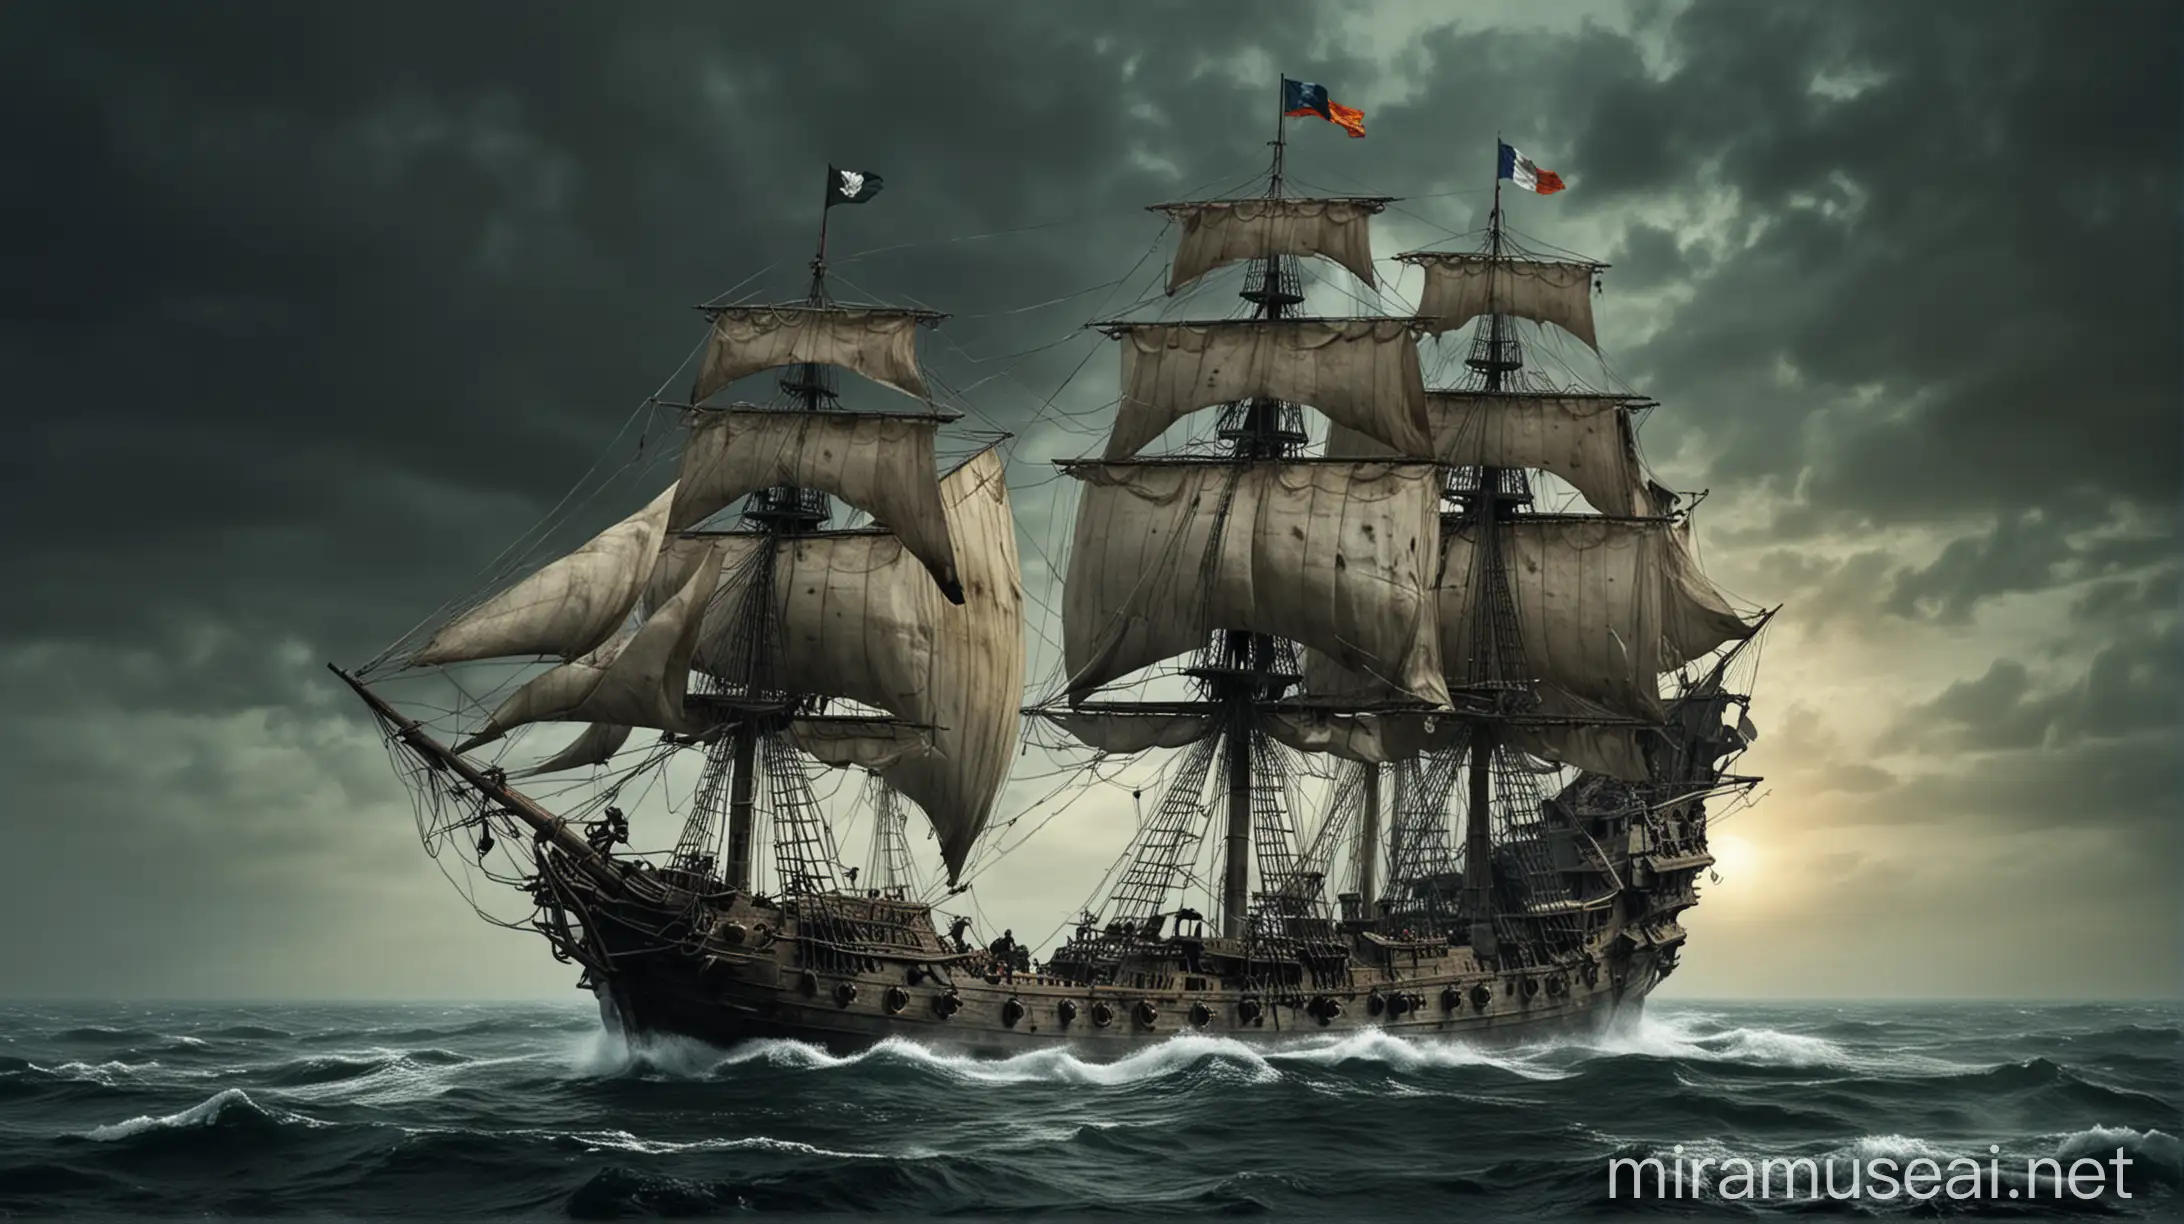 Legendary Flying Dutchman Ship Sailing through Stormy Seas